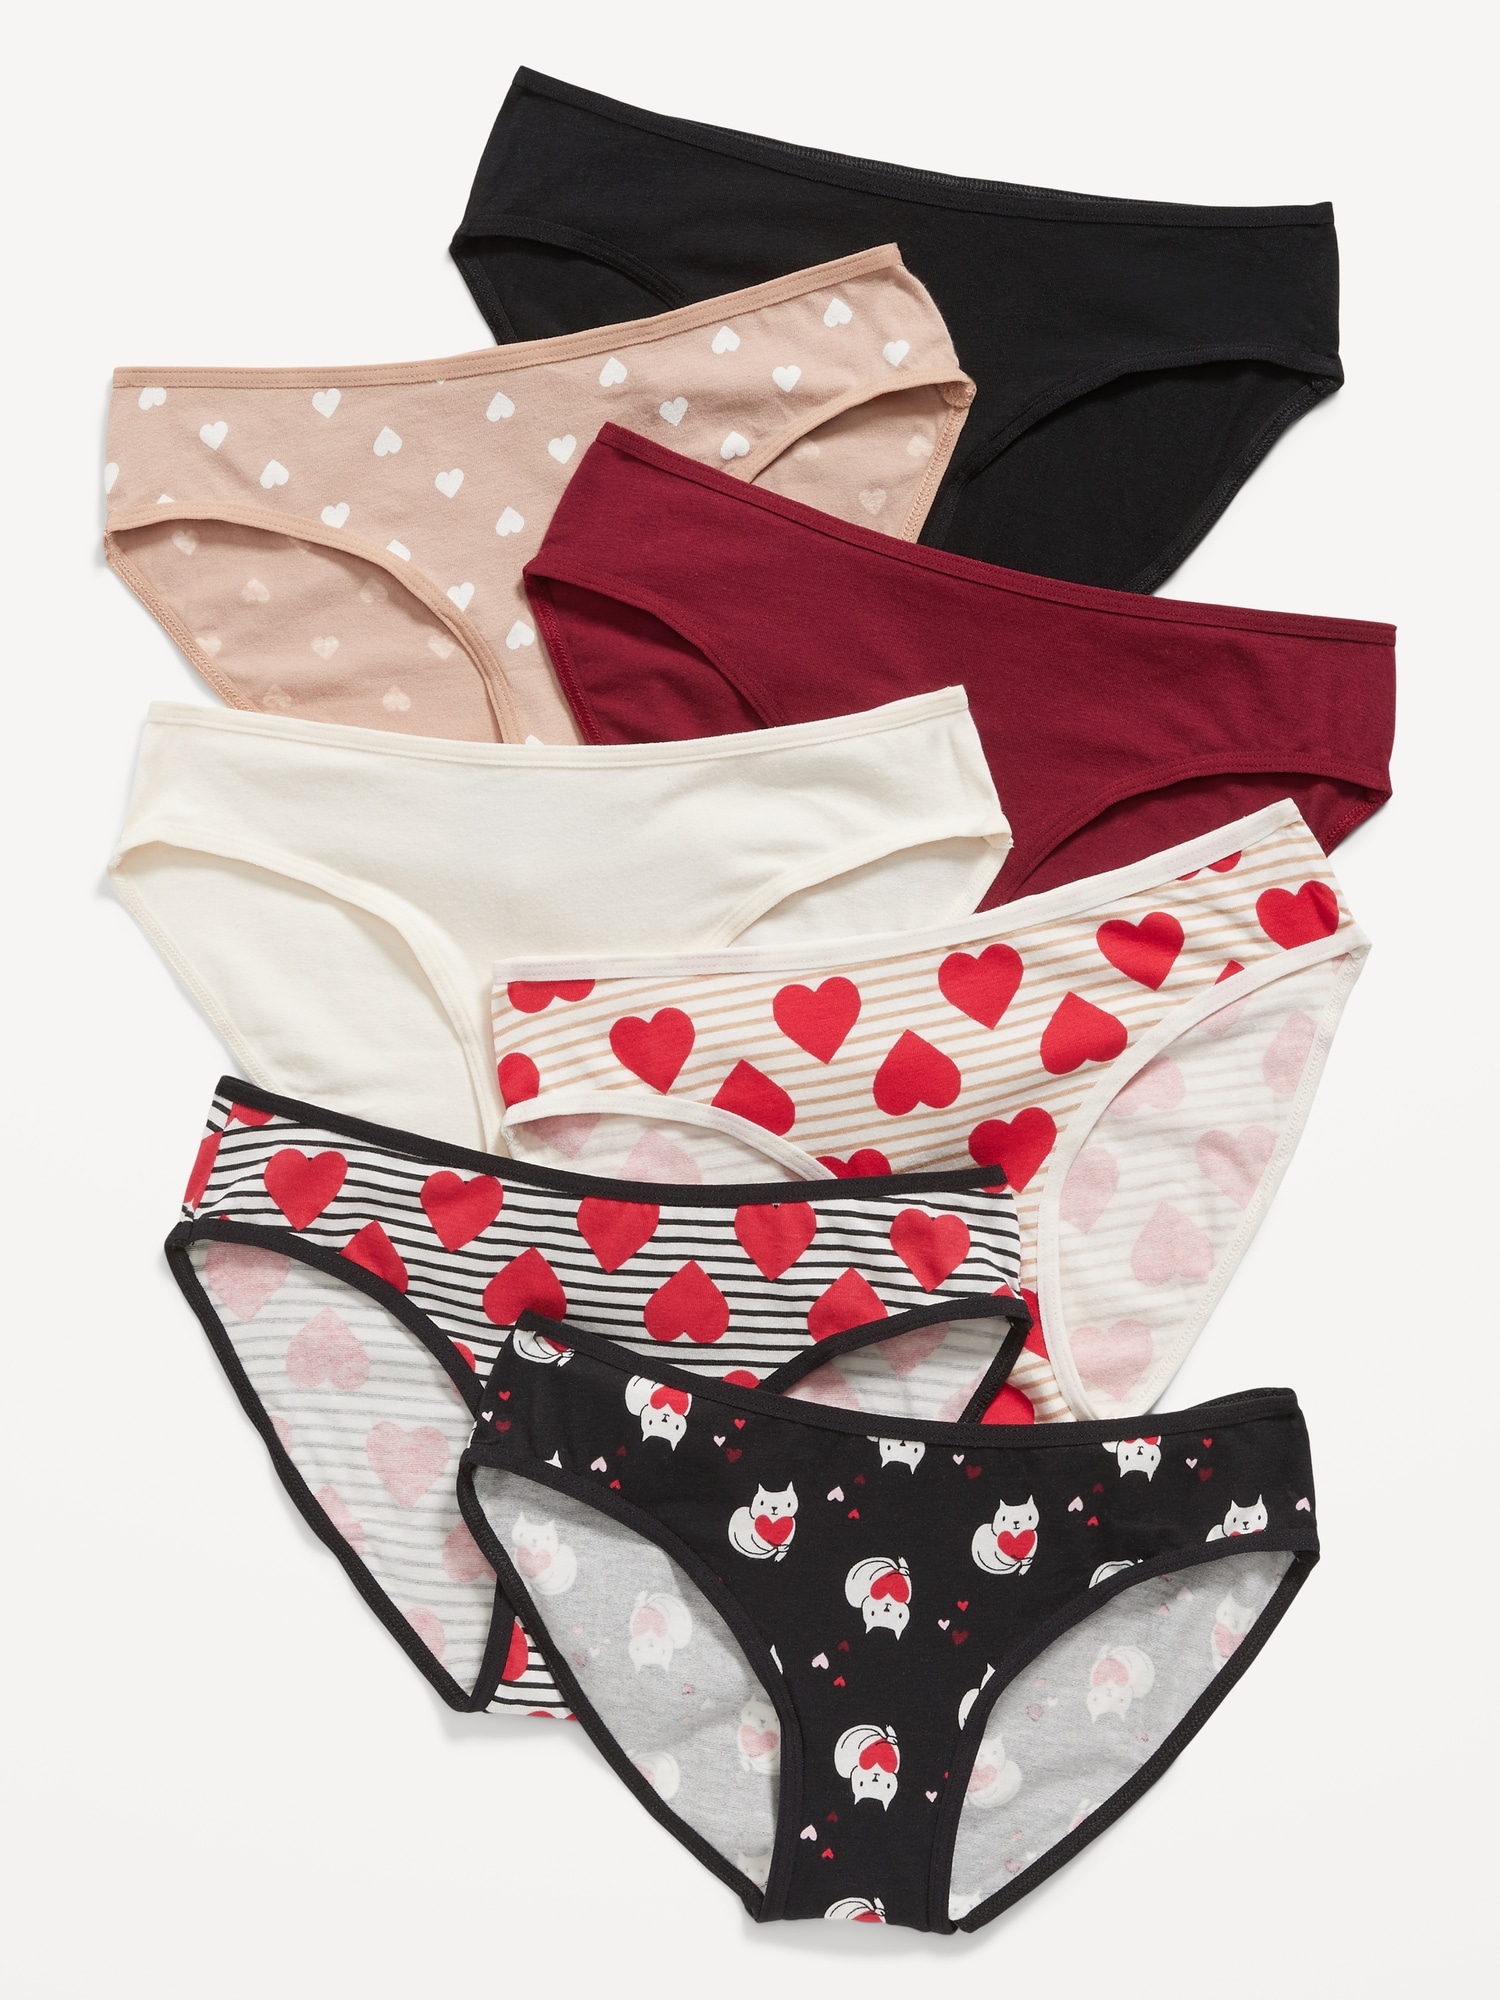 KIDS - GIRL - Underwear - Bras Martha's - Underwear, Sleepwear, Swimwear -  Popular Brands - Shop online